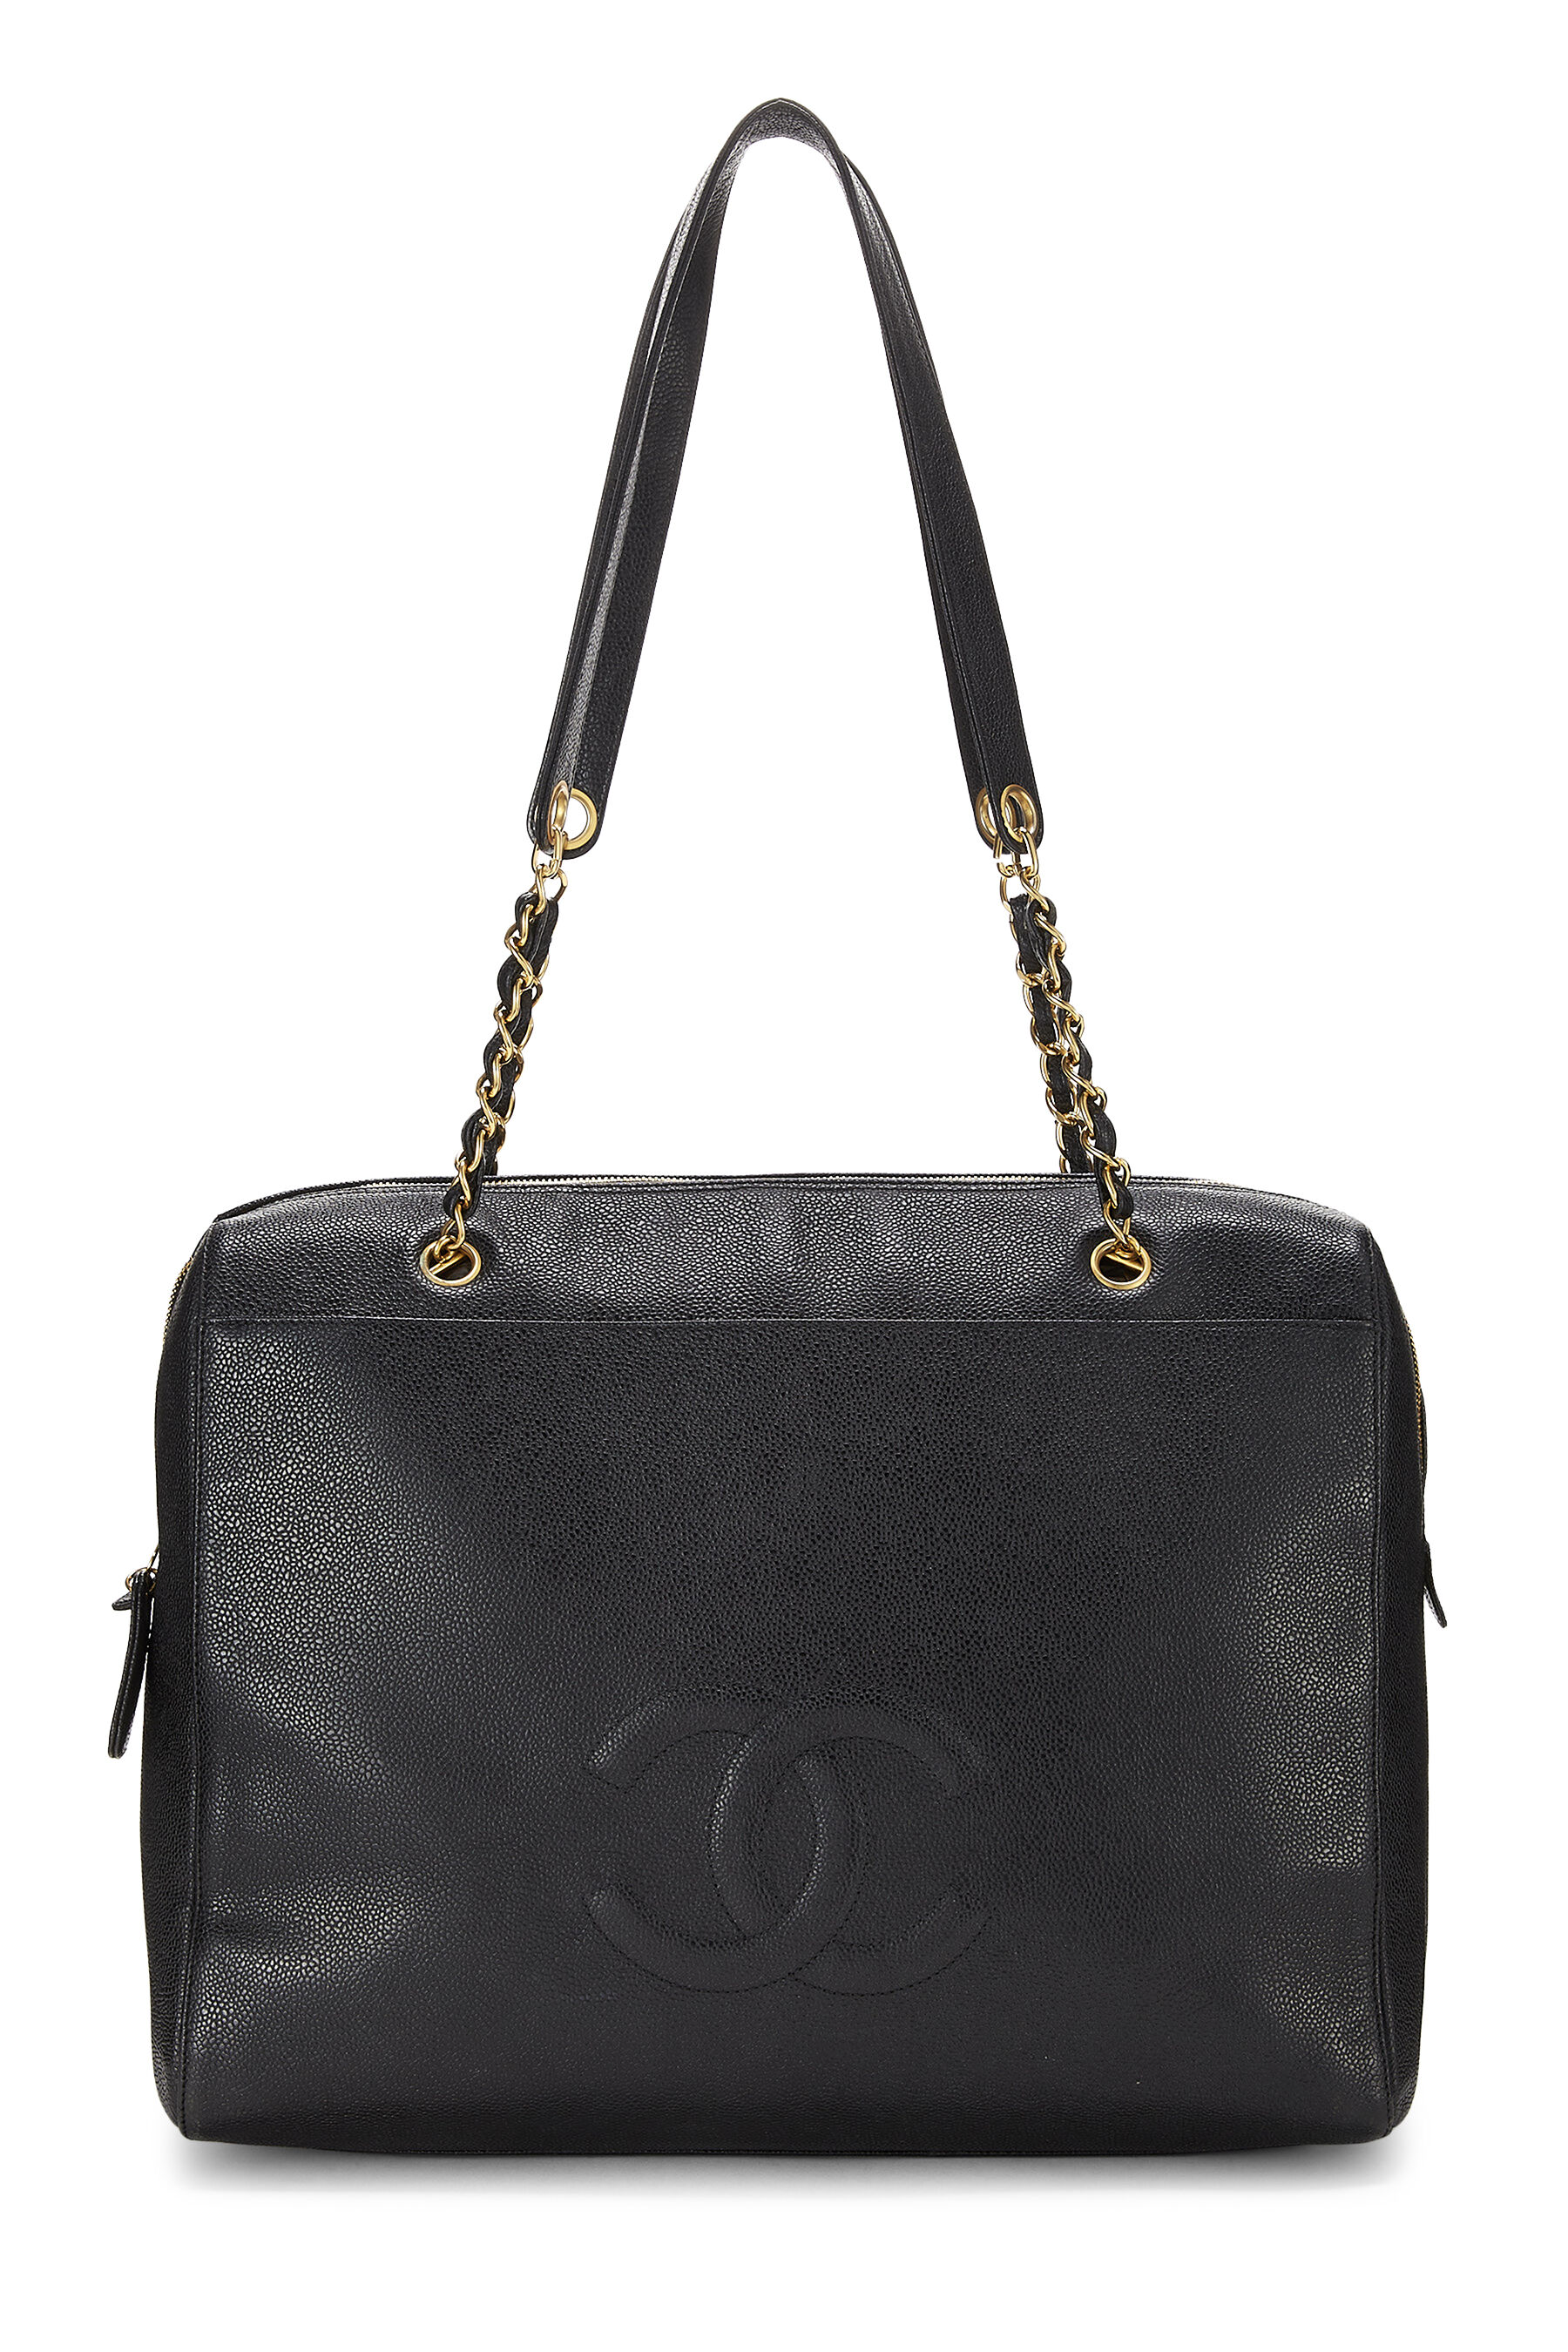 Chanel Black Leather Jumbo Extra Large Tote Bag - ShopStyle